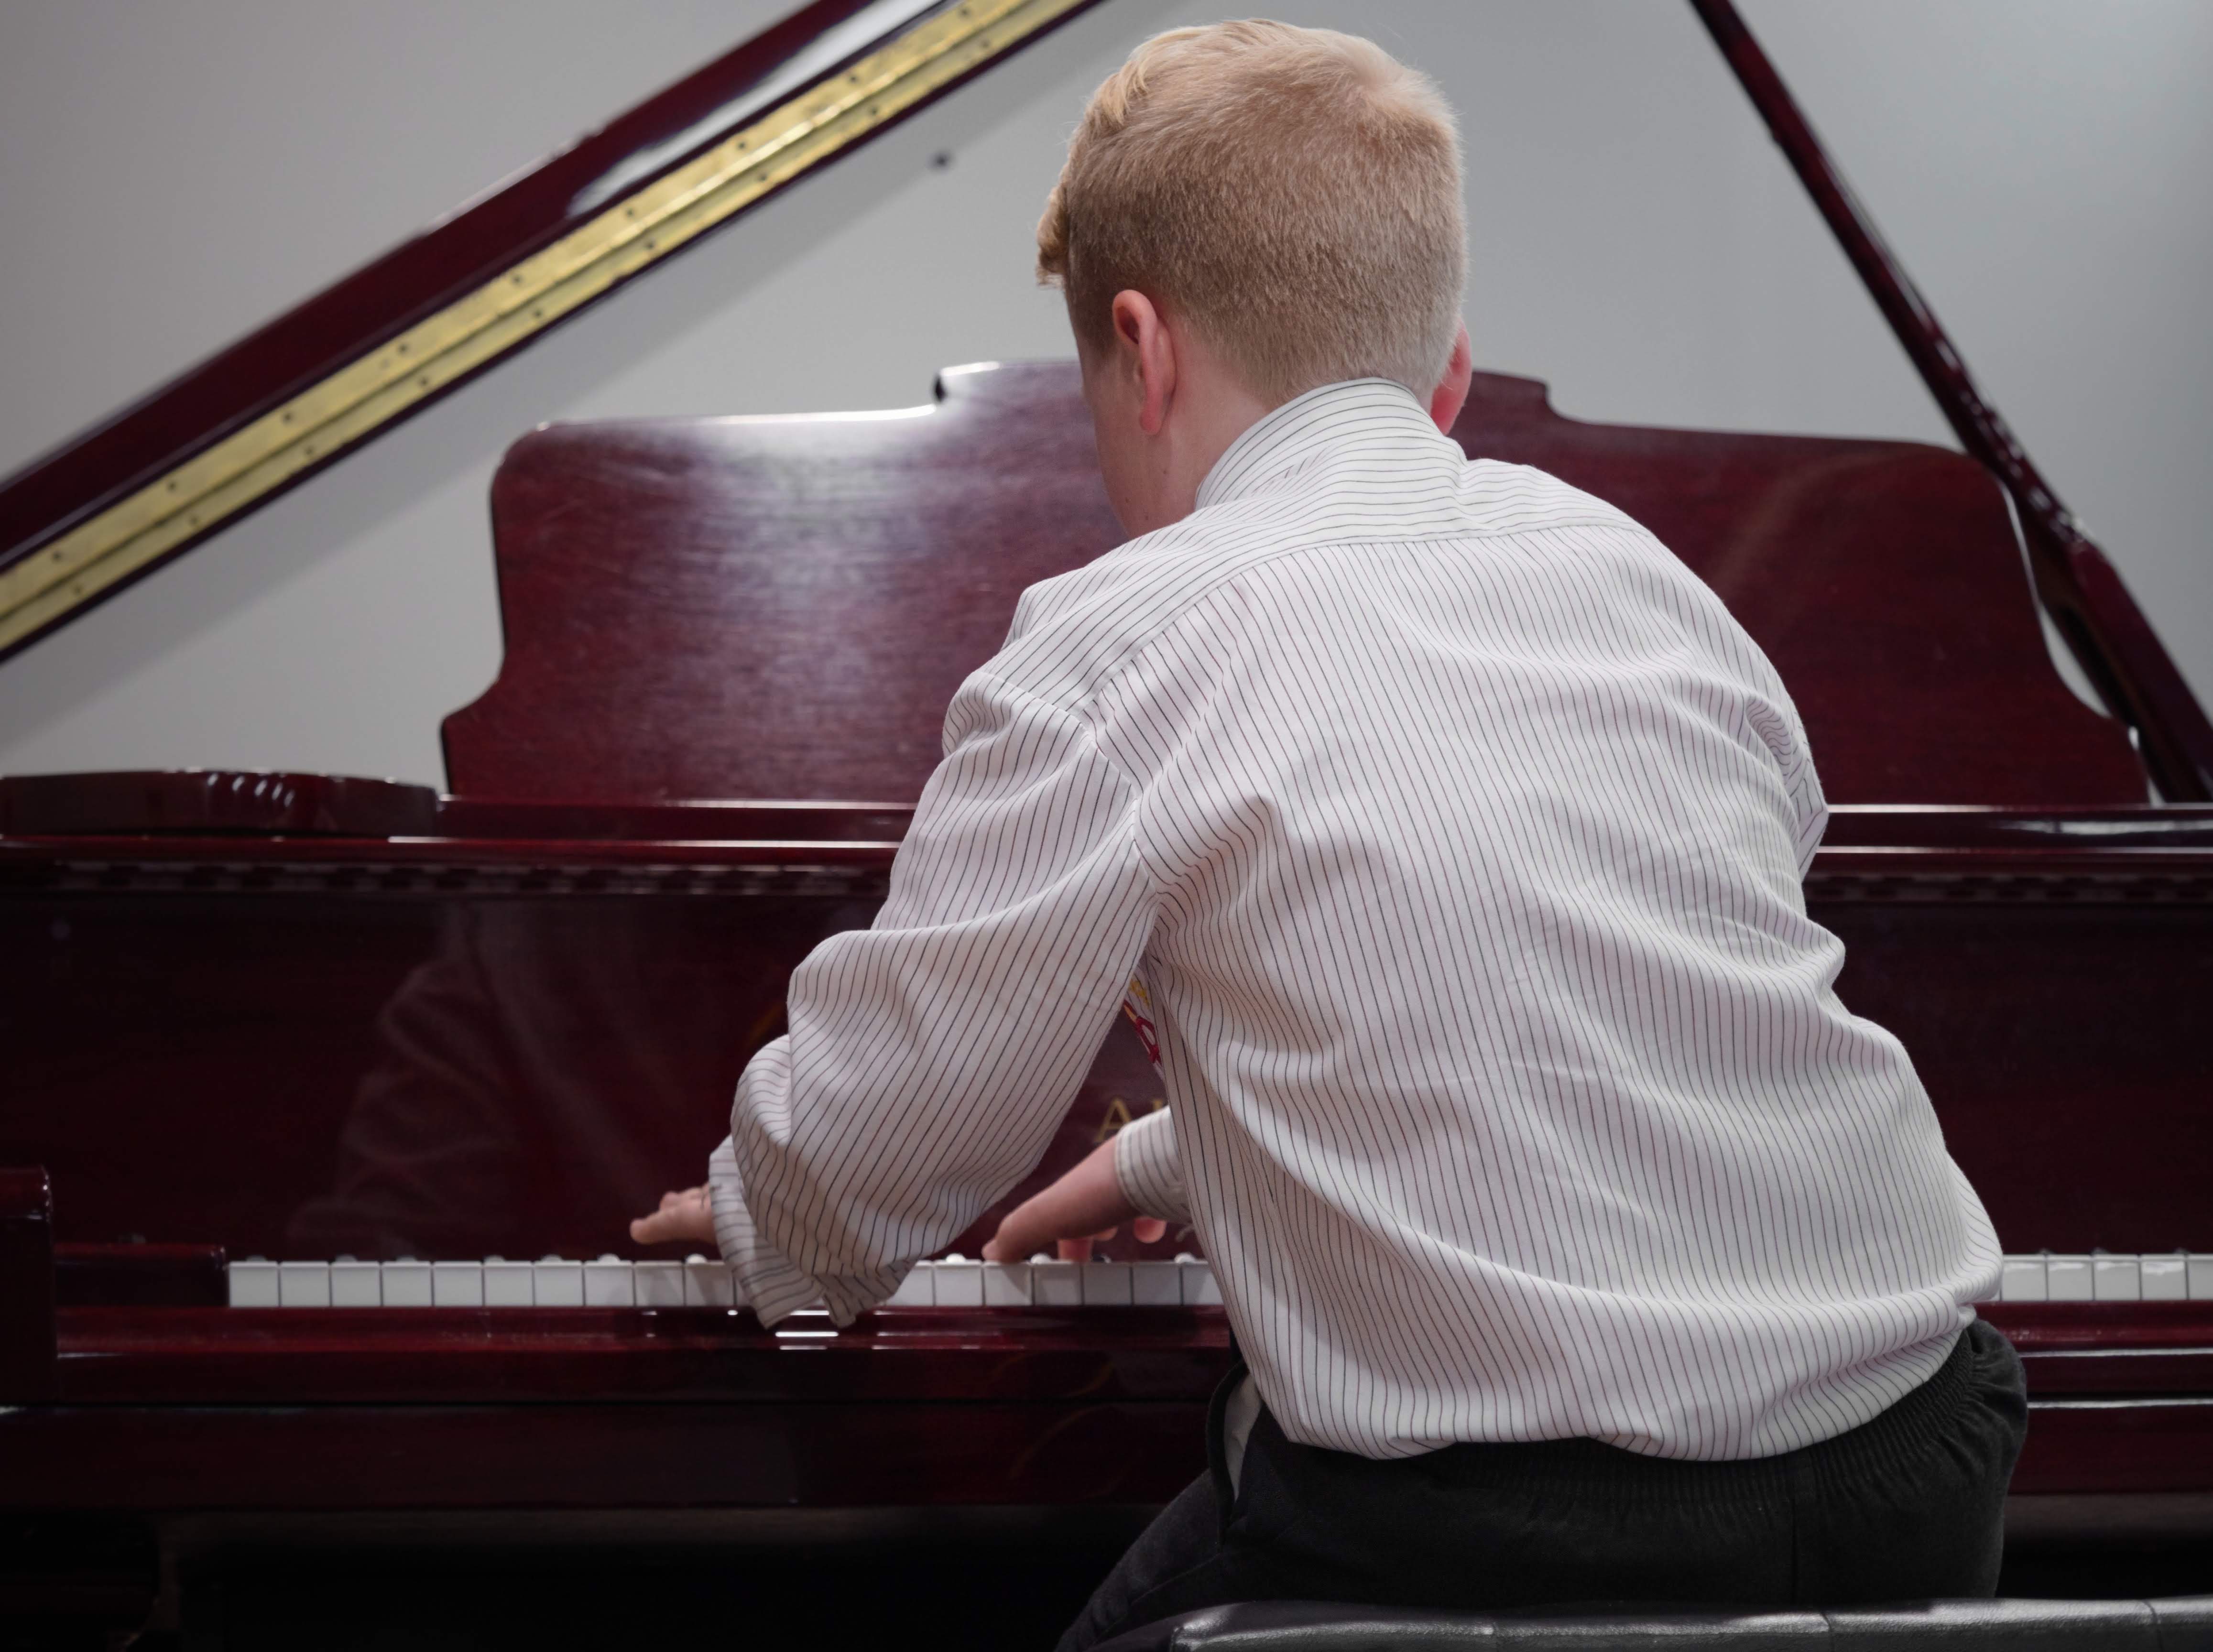 WGE Pianoforte Day 1 Oscar Wilkins Displays his skills on the Piano